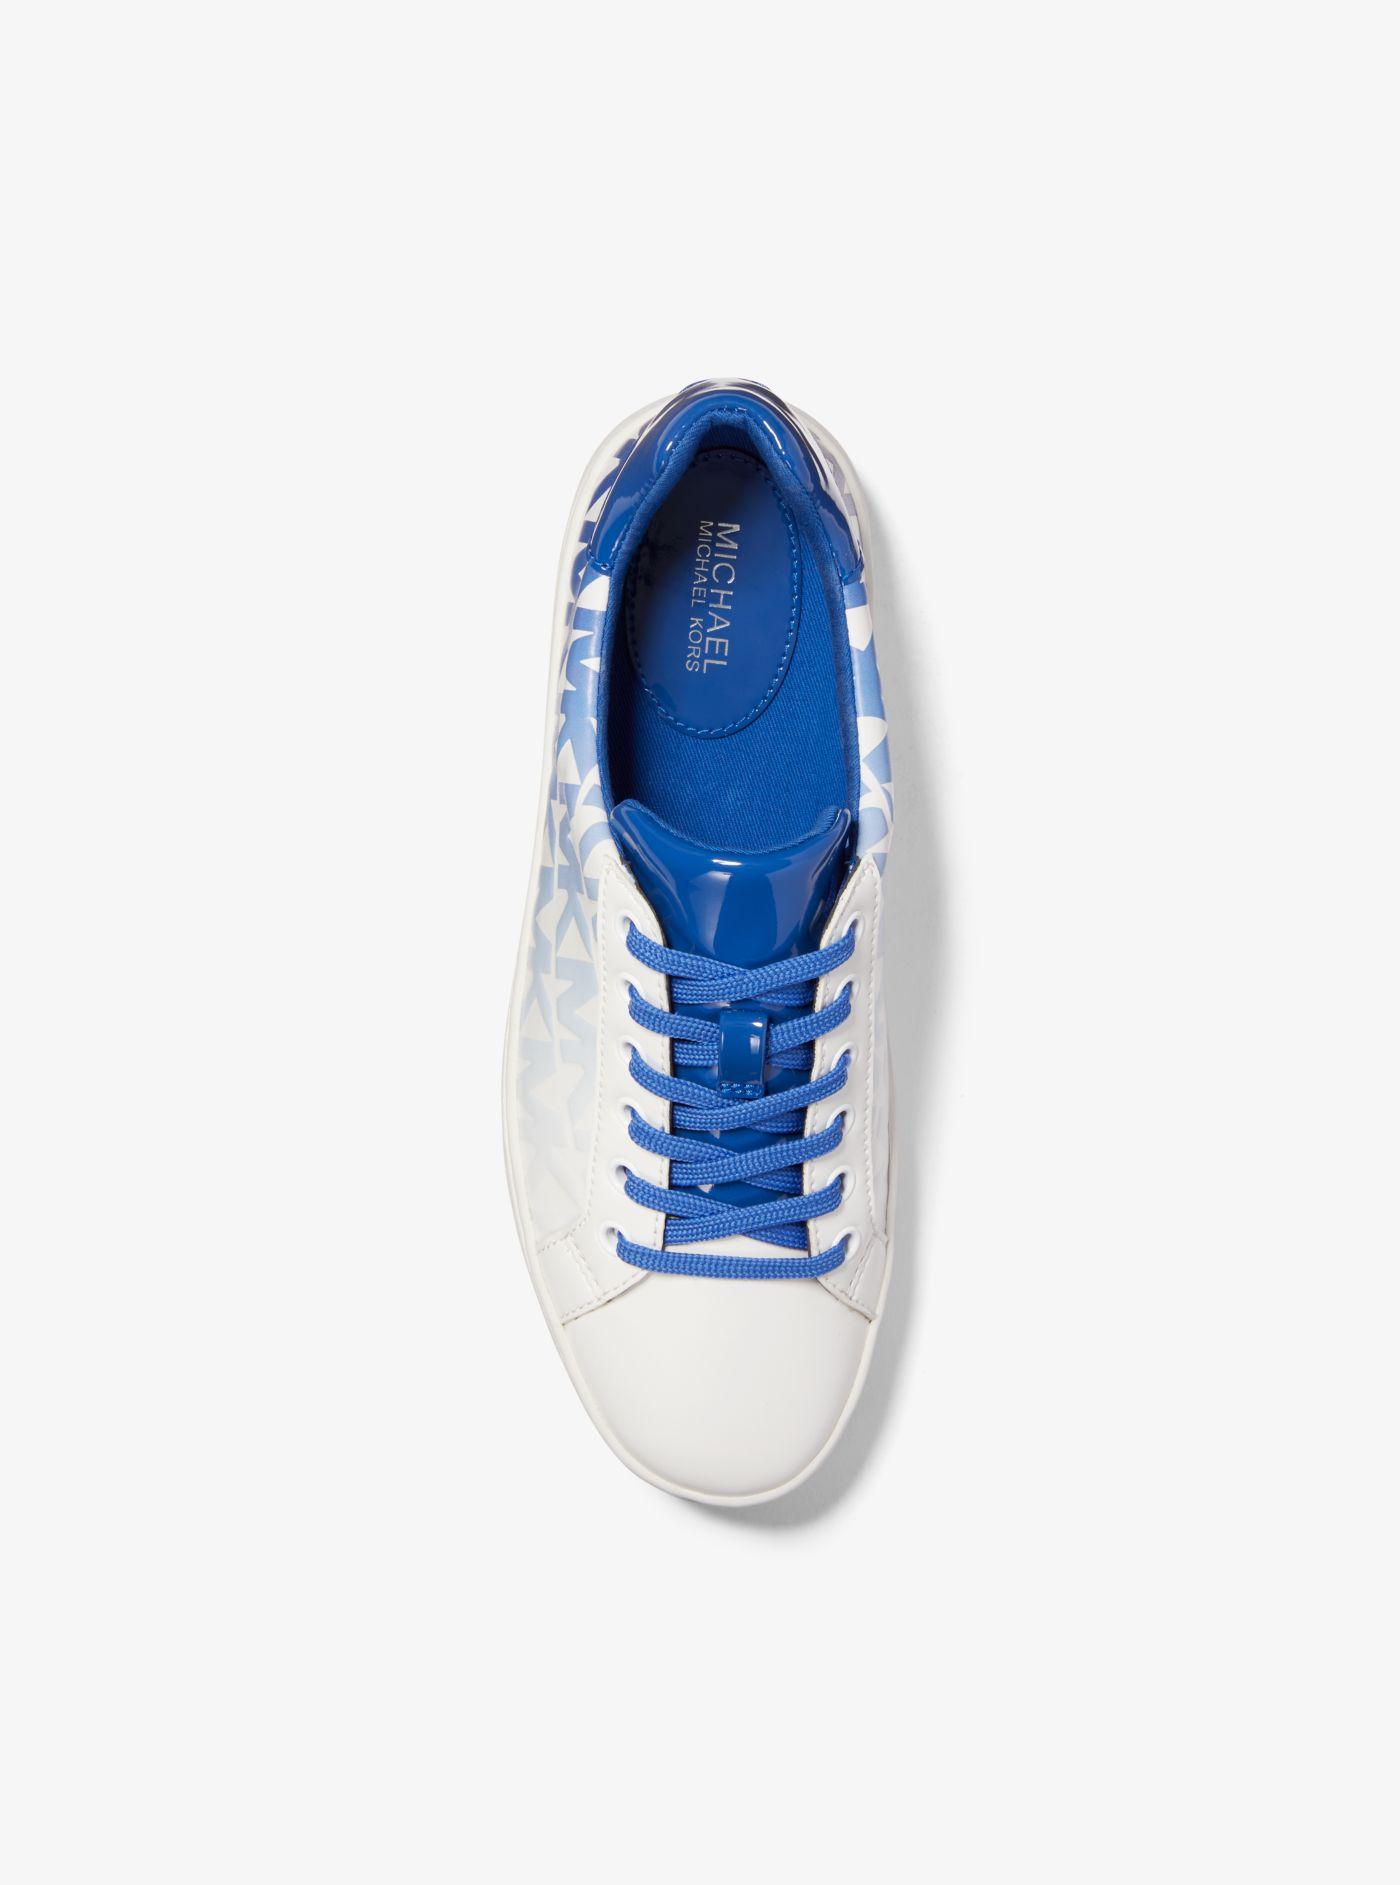 Michael Kors Poppy Graphic Logo Faux Leather Sneaker in Blue | Lyst